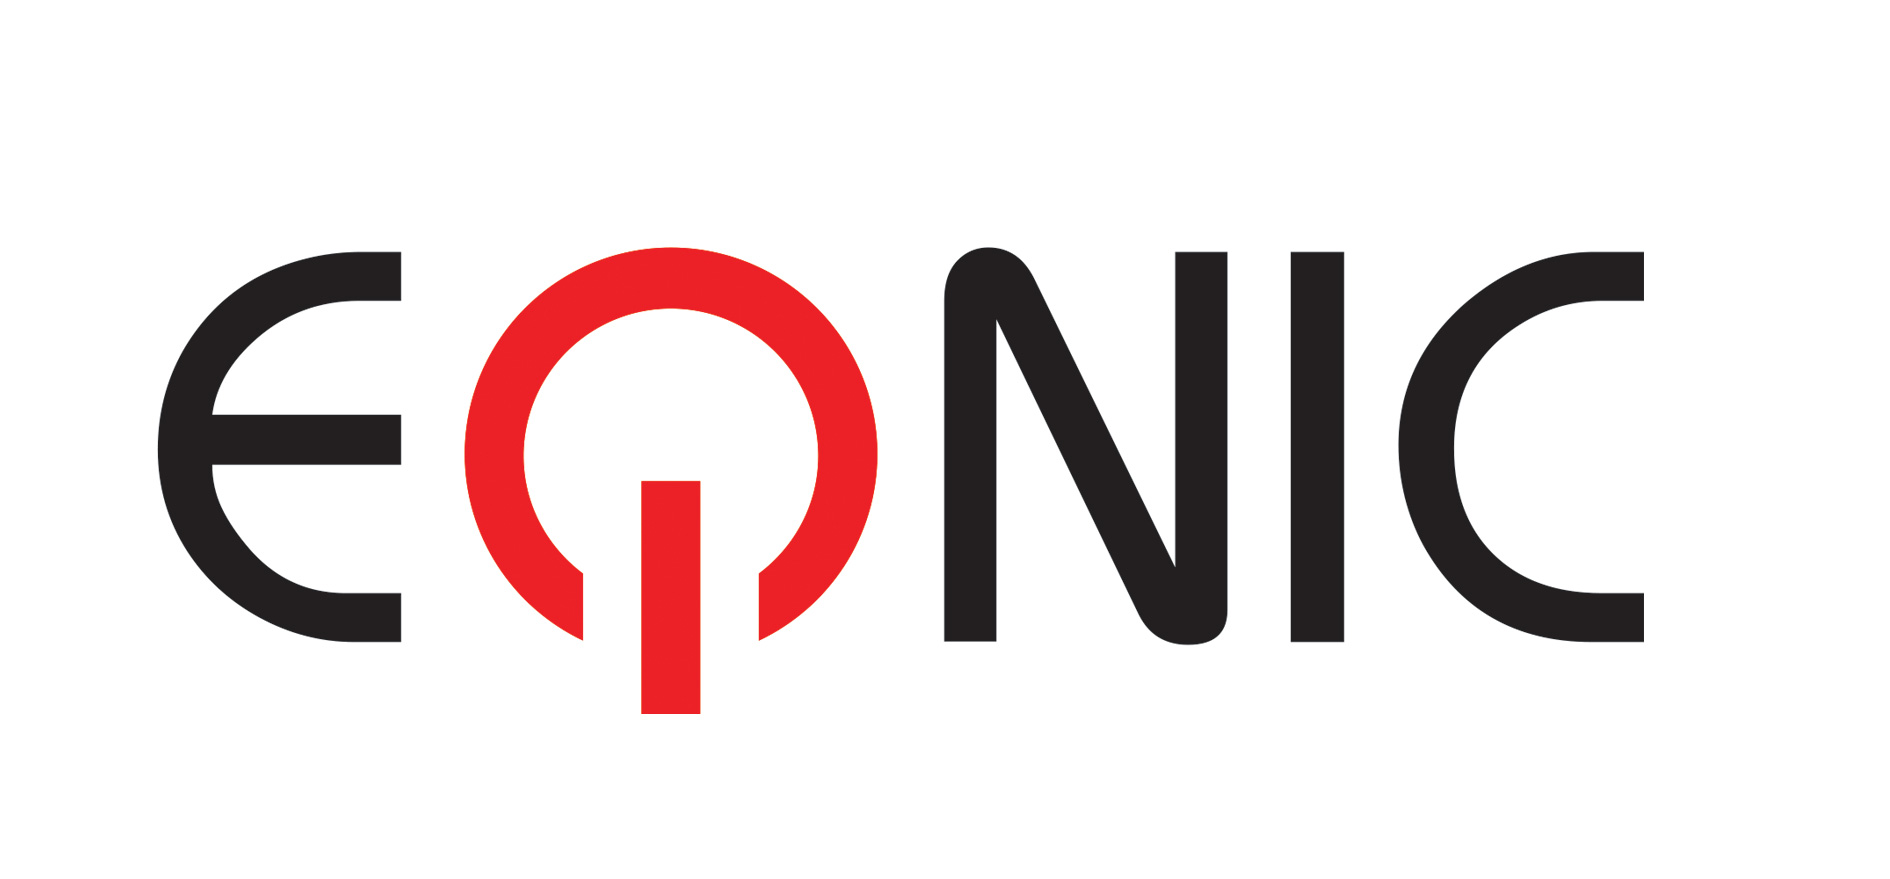 Eqnic Logo Design